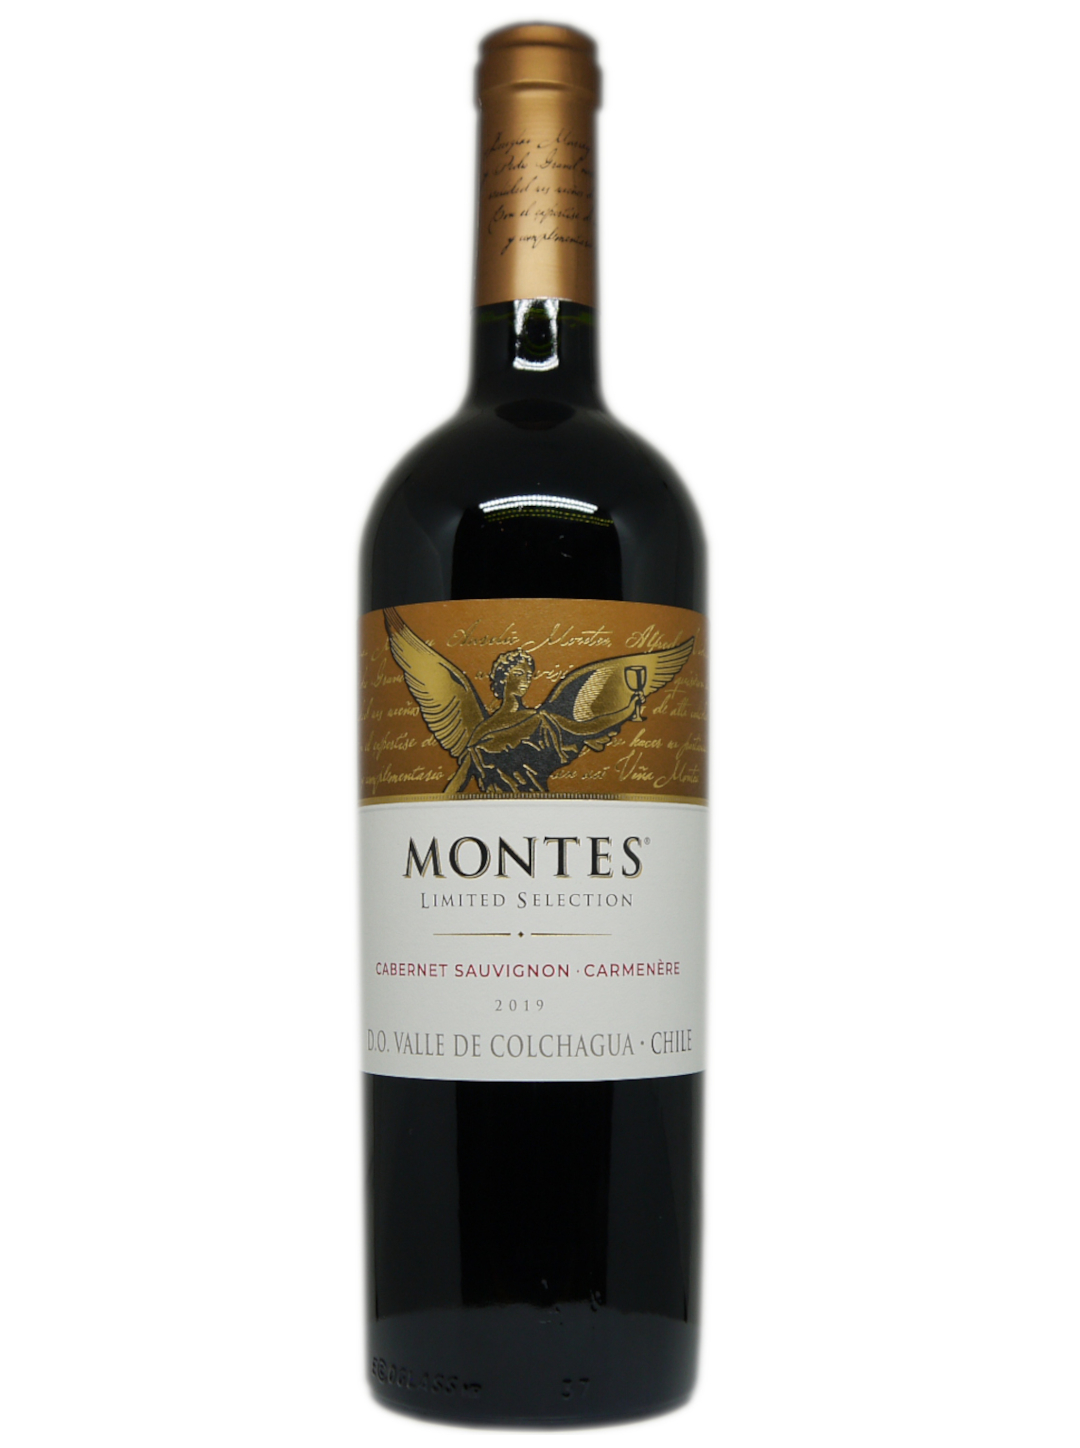 Montes Limited Selection Cabernet Sauvignon & Carmenere Colchagua Valley